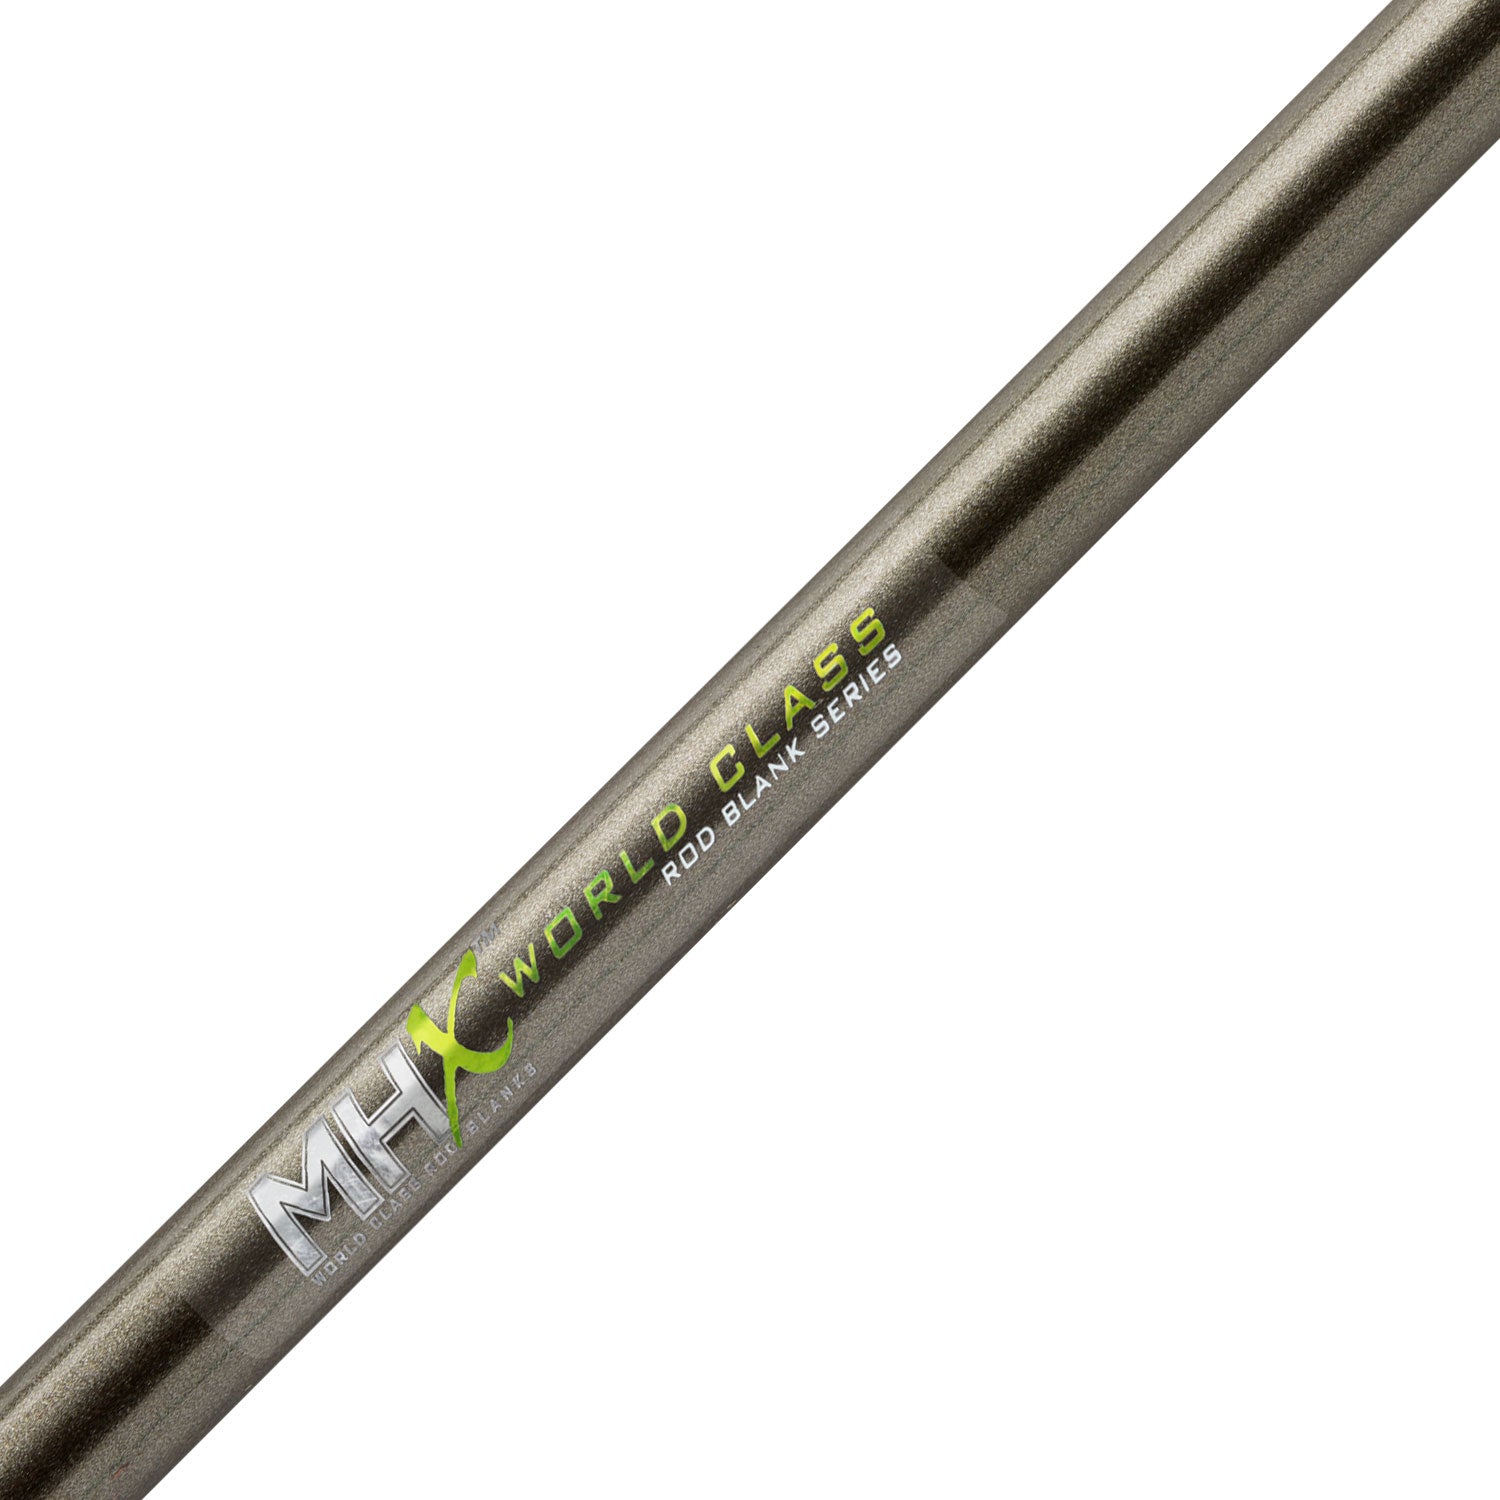 MHX 6'6 Ultralight Spinning Rod Kit S781